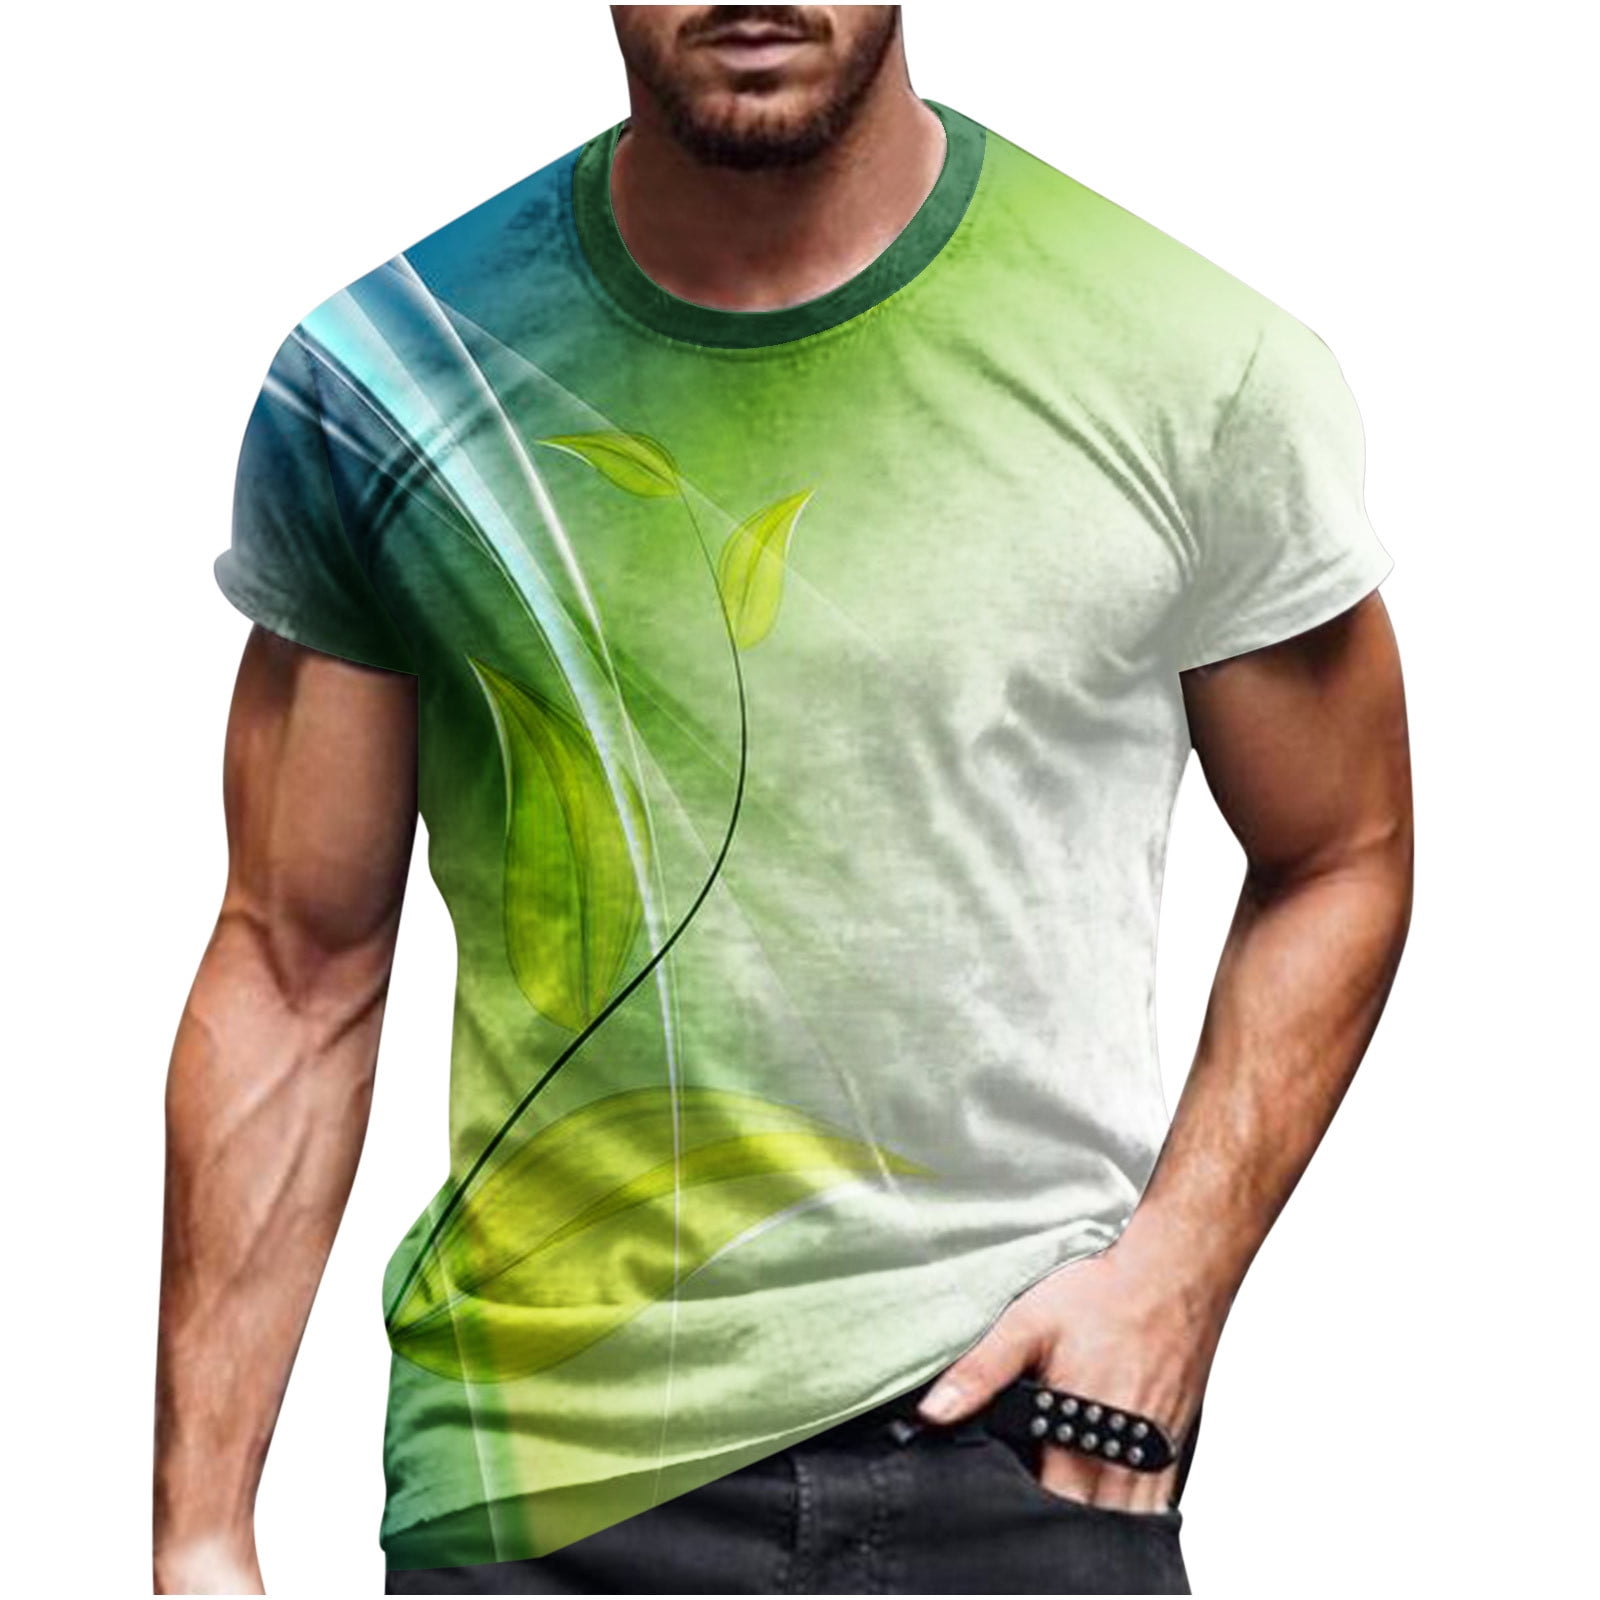 Loose Fit T-shirt - Green - Men